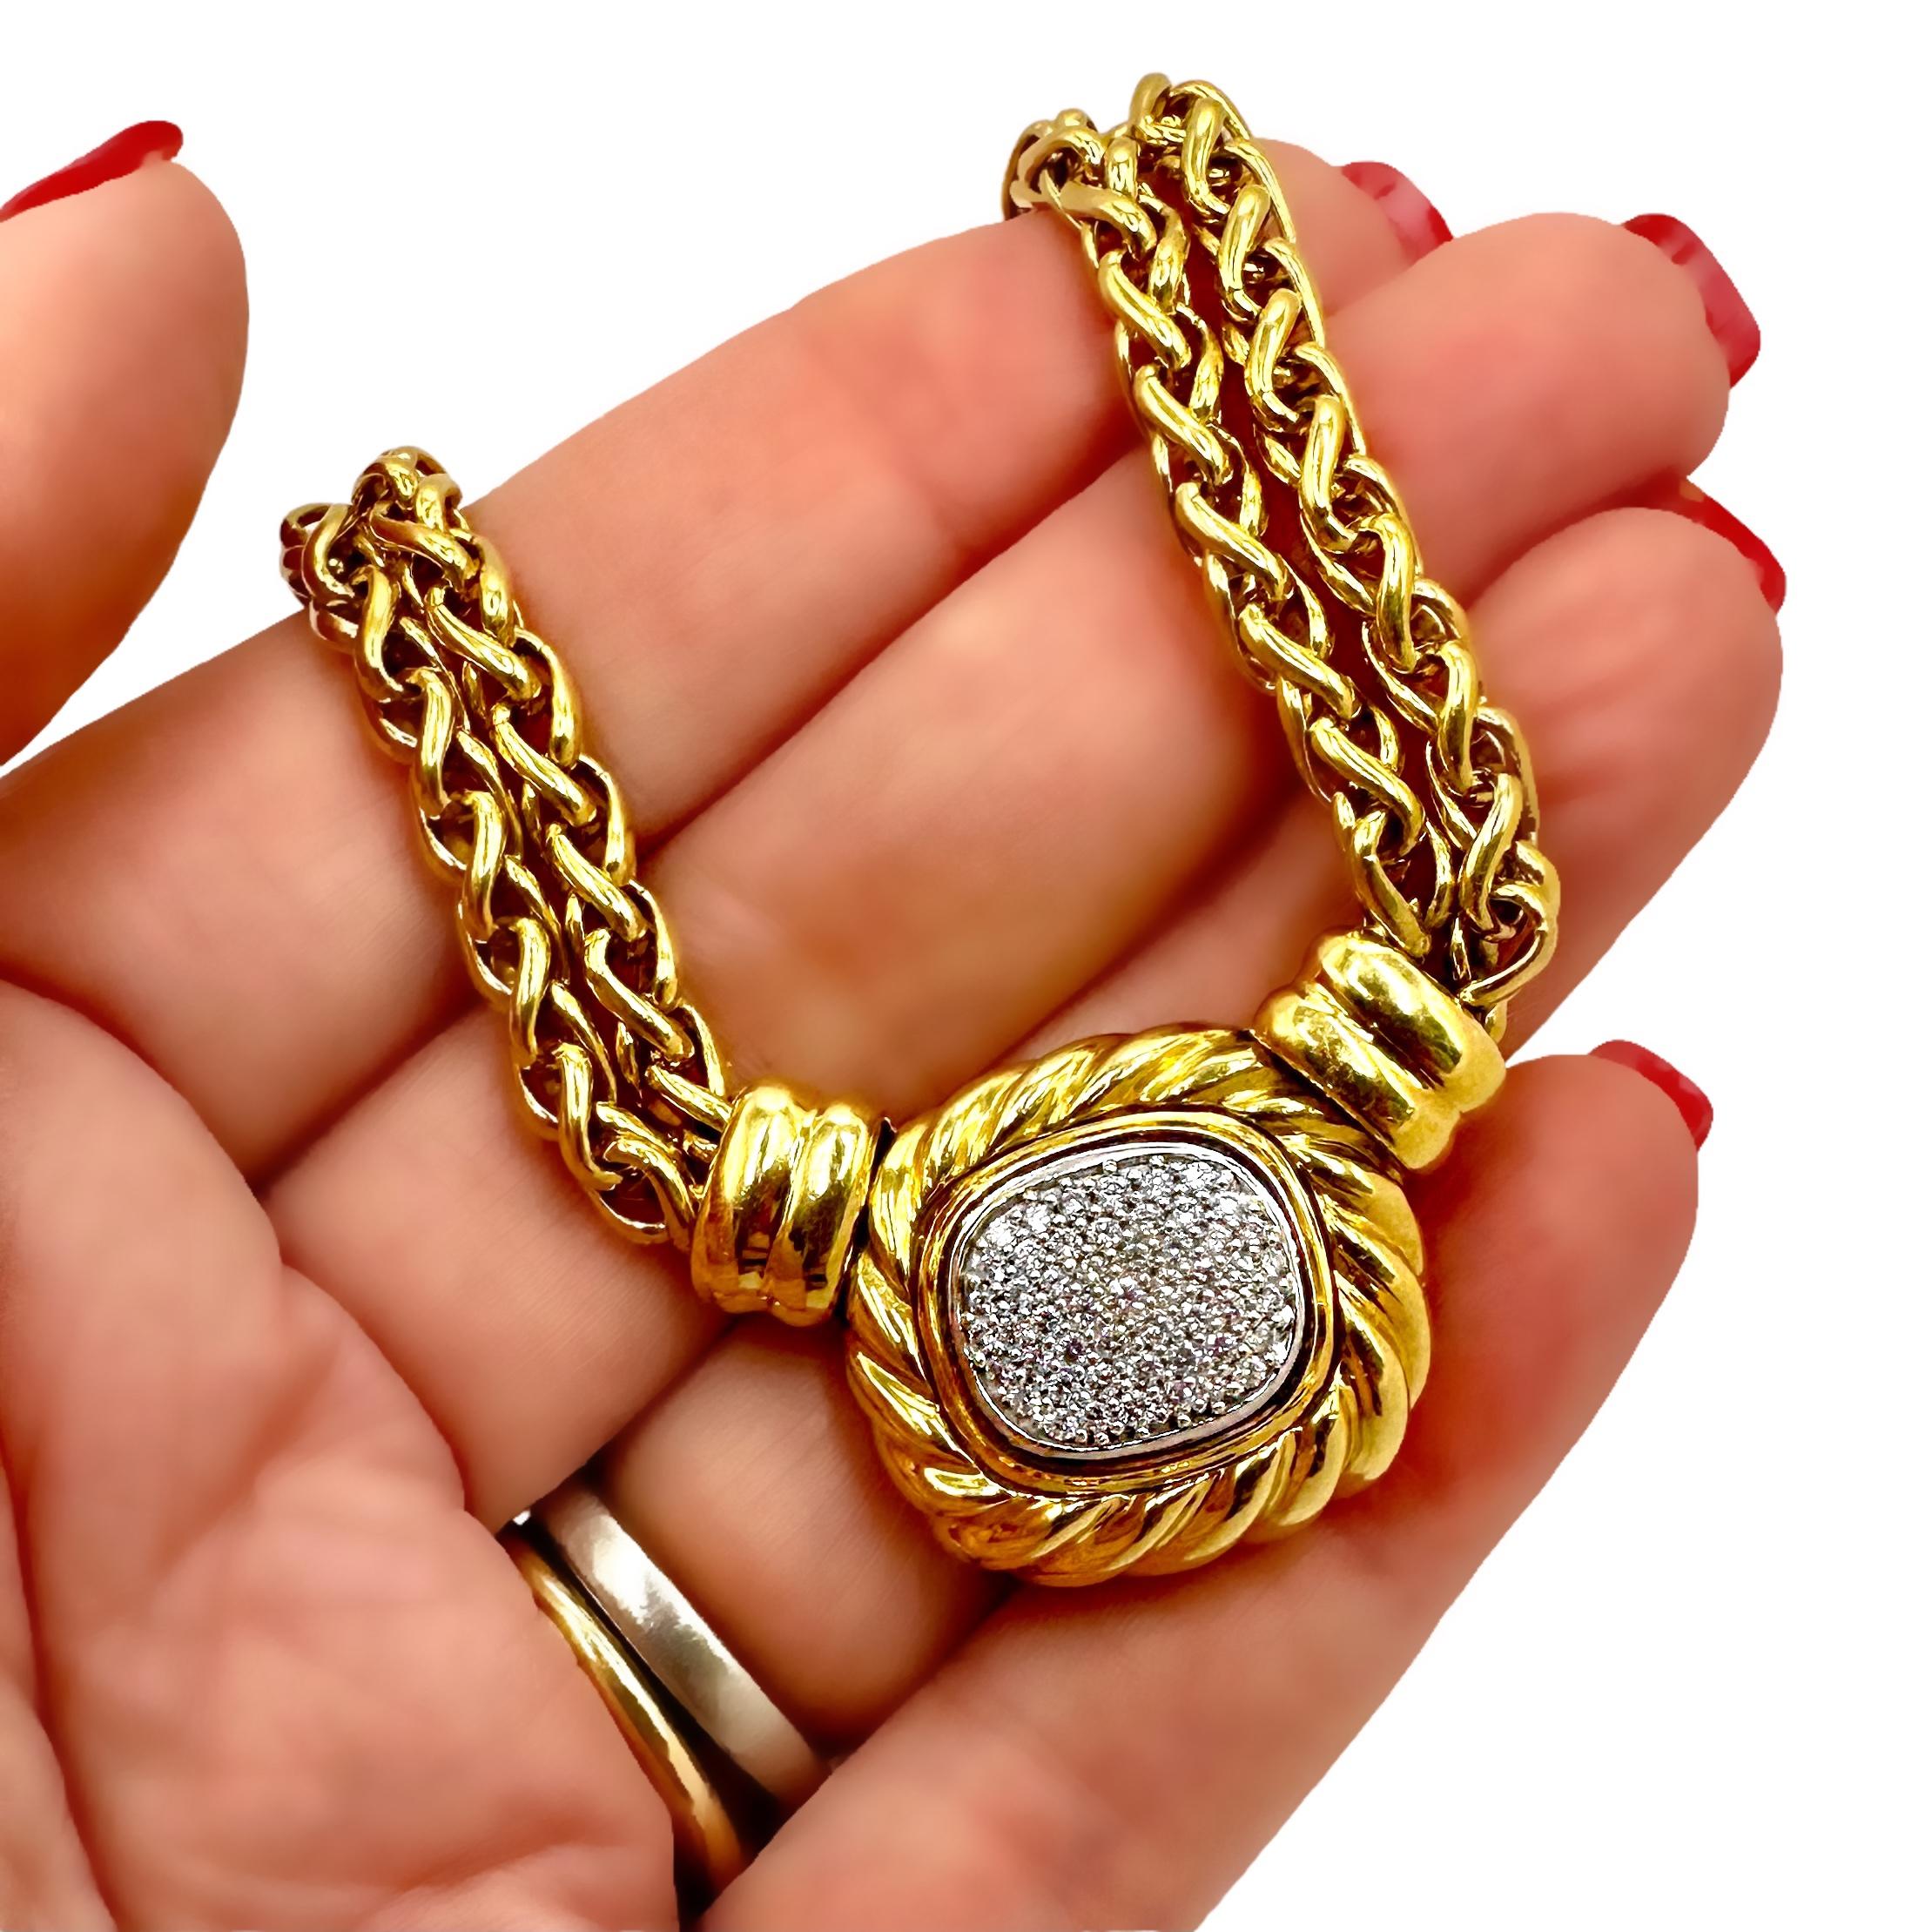 Brilliant Cut David Yurman 18K Gold and Diamond Choker Necklace with Pave Set Diamond Center For Sale